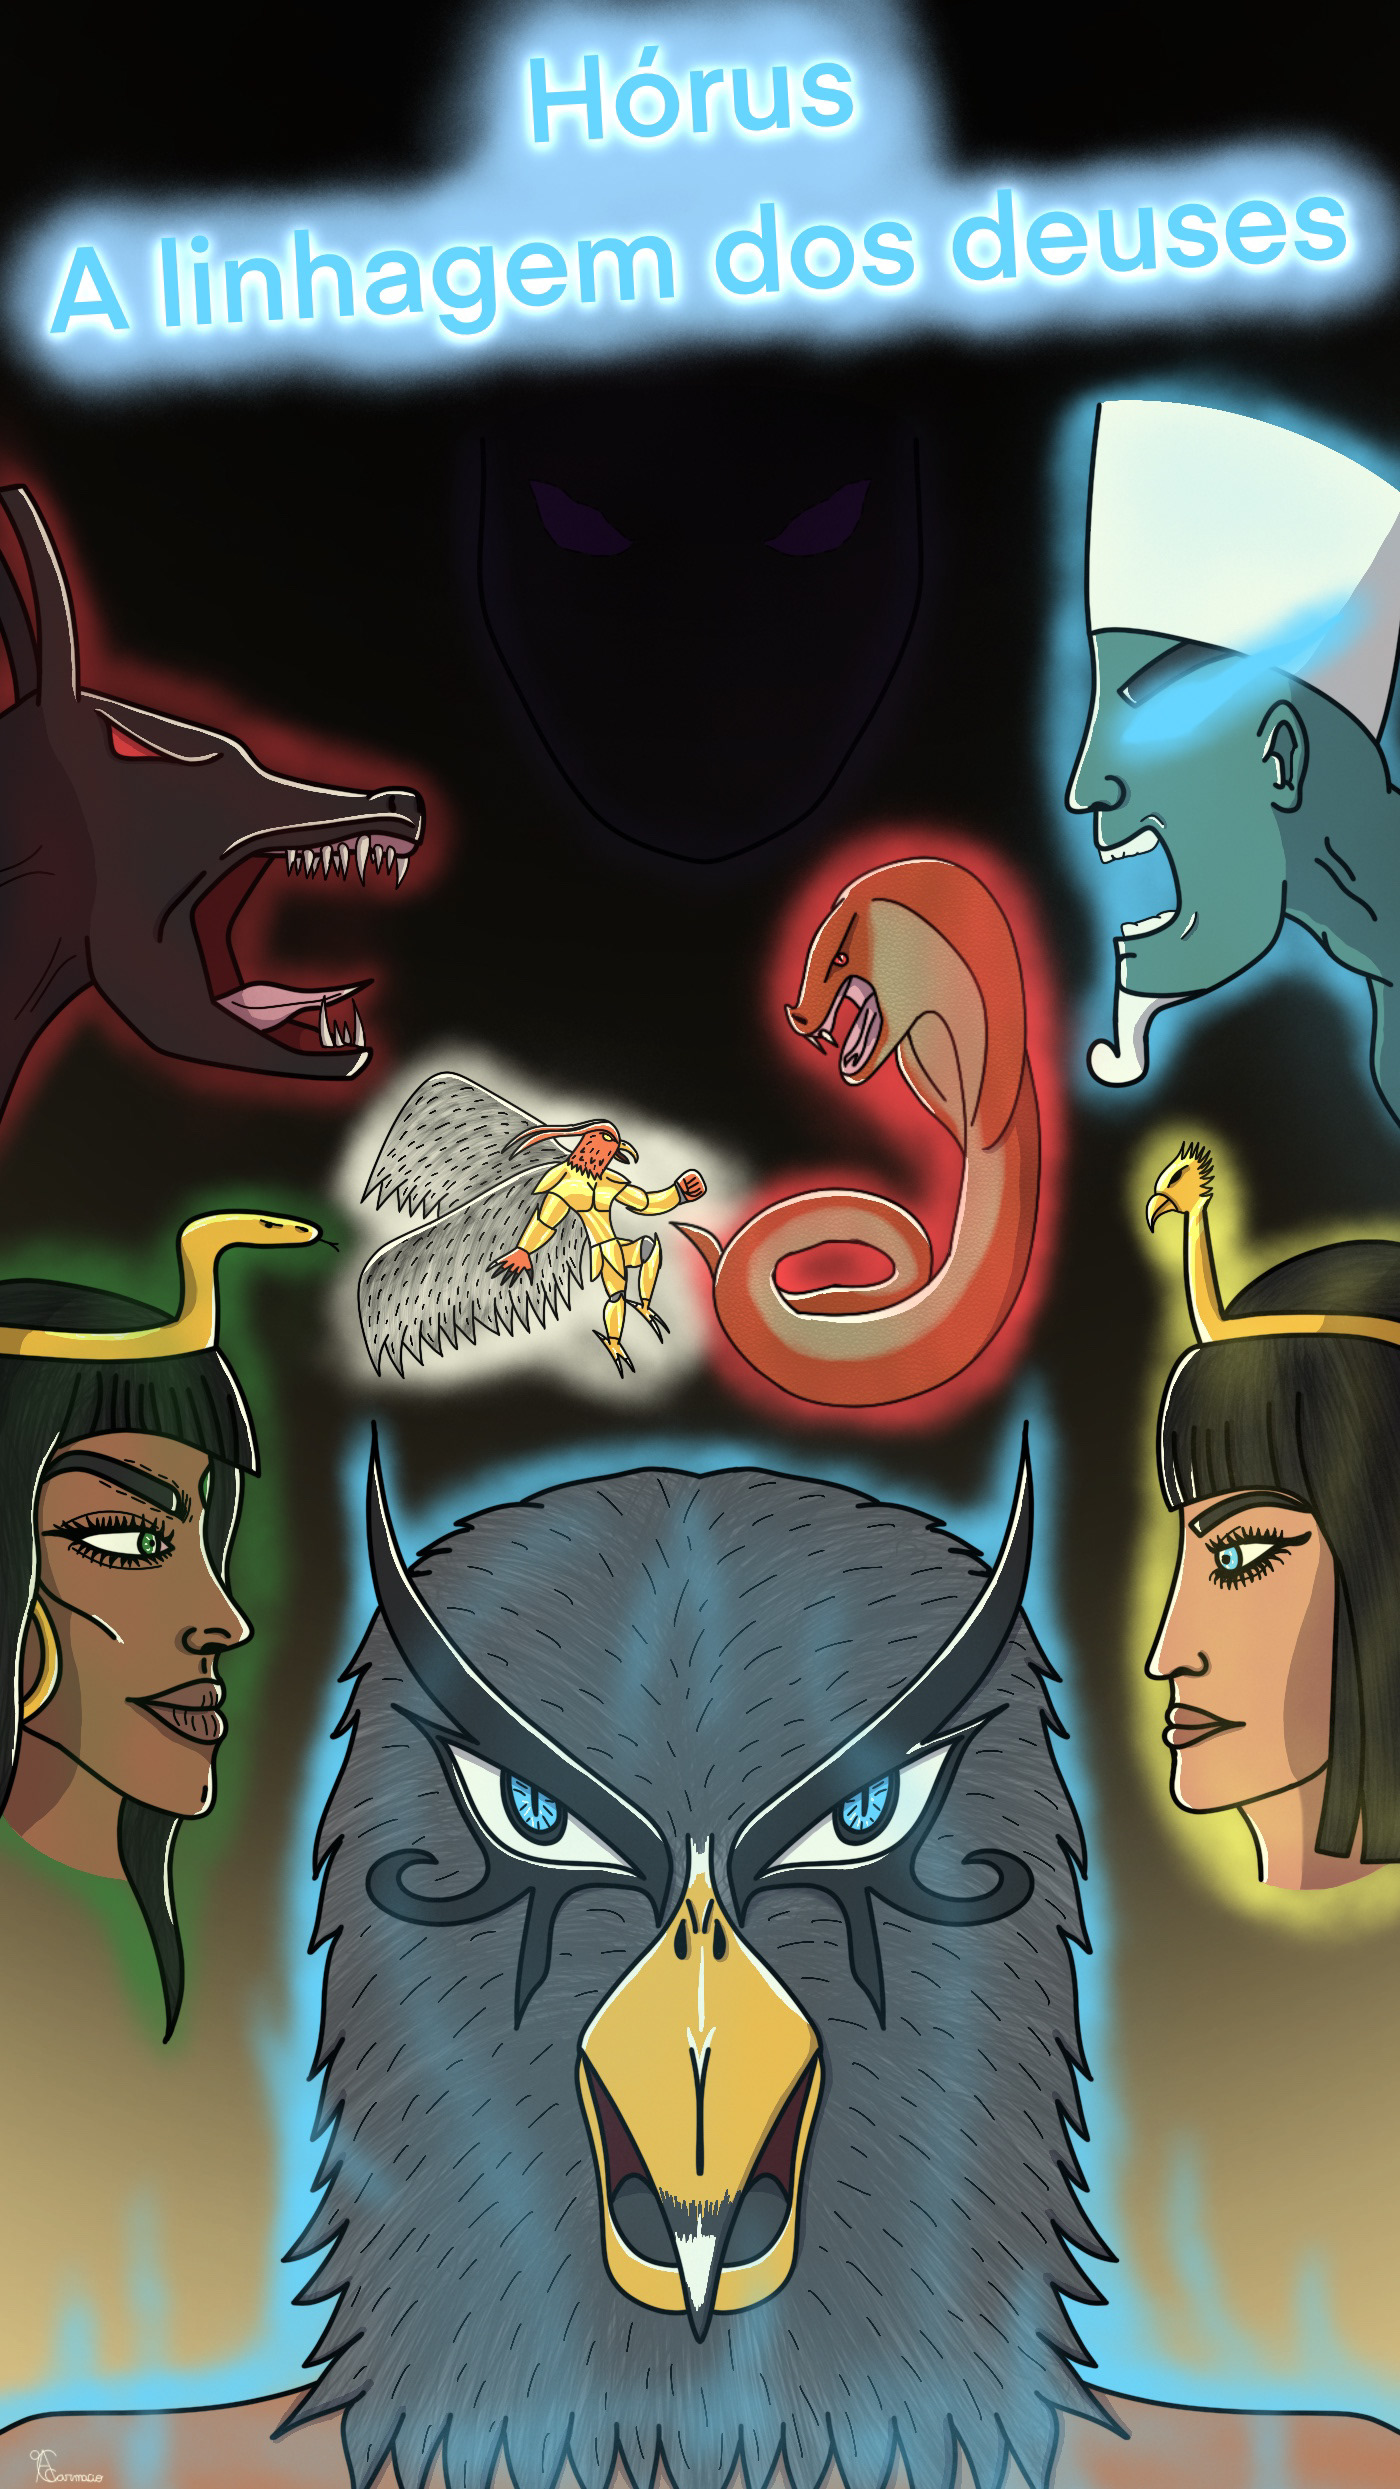 mythology fantasy Digital Art  ILLUSTRATION  Character design  kidlit publishing   book Horus egypt